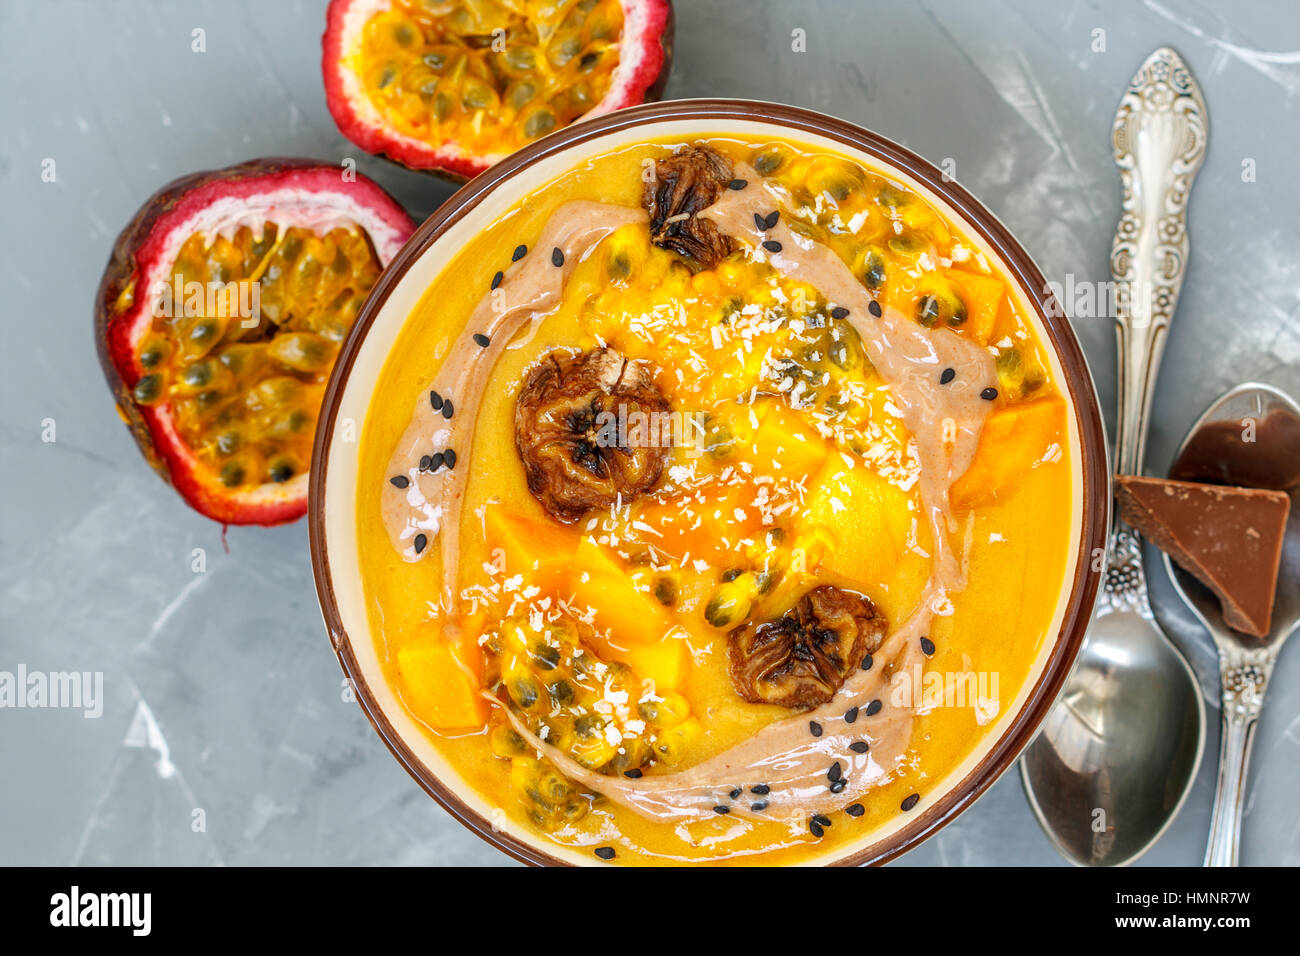 https://c8.alamy.com/comp/HMNR7W/vegan-breakfast-smoothie-bowl-with-mango-and-passion-fruit-love-for-HMNR7W.jpg